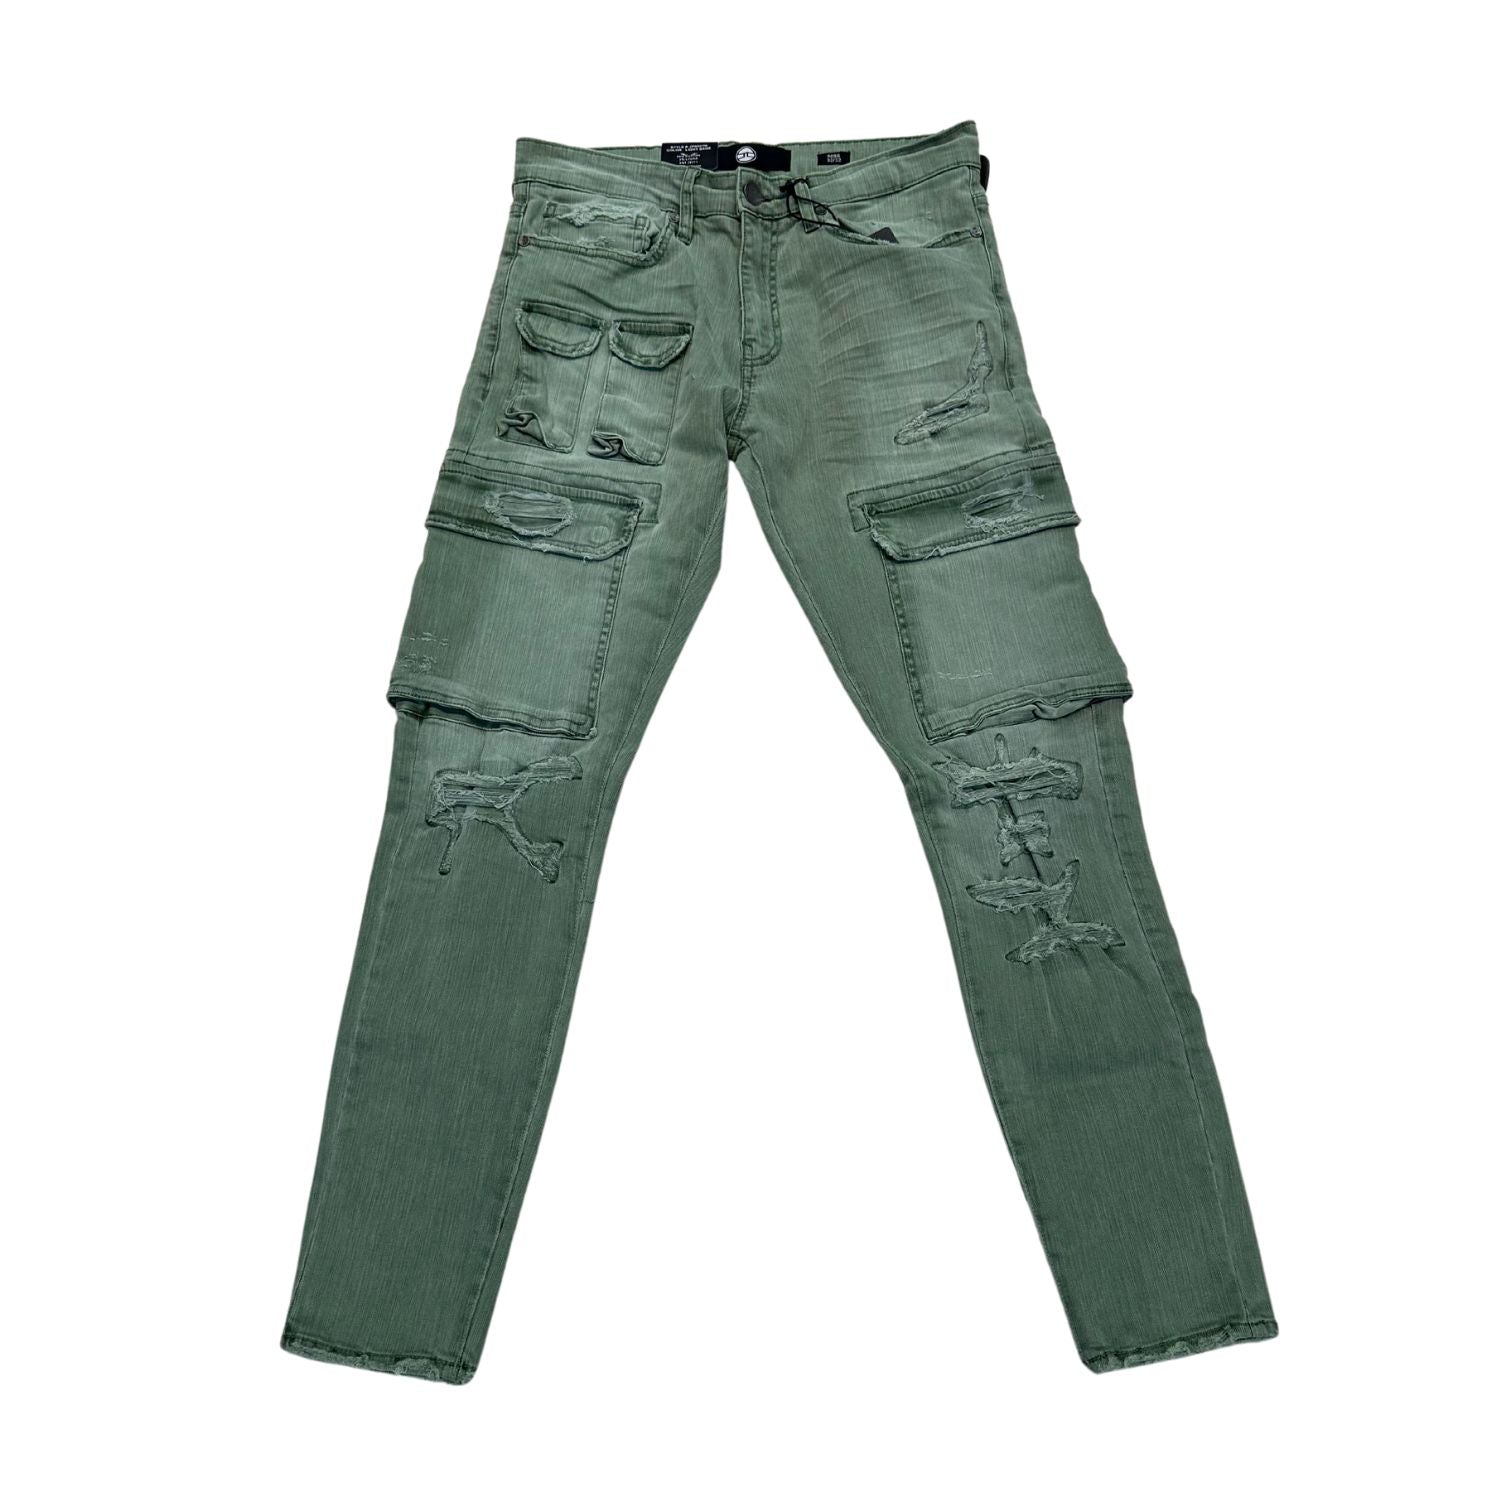 Jordan Craig Ross Fit Tactical Ripped Jeans Mens Style : Jr950tr